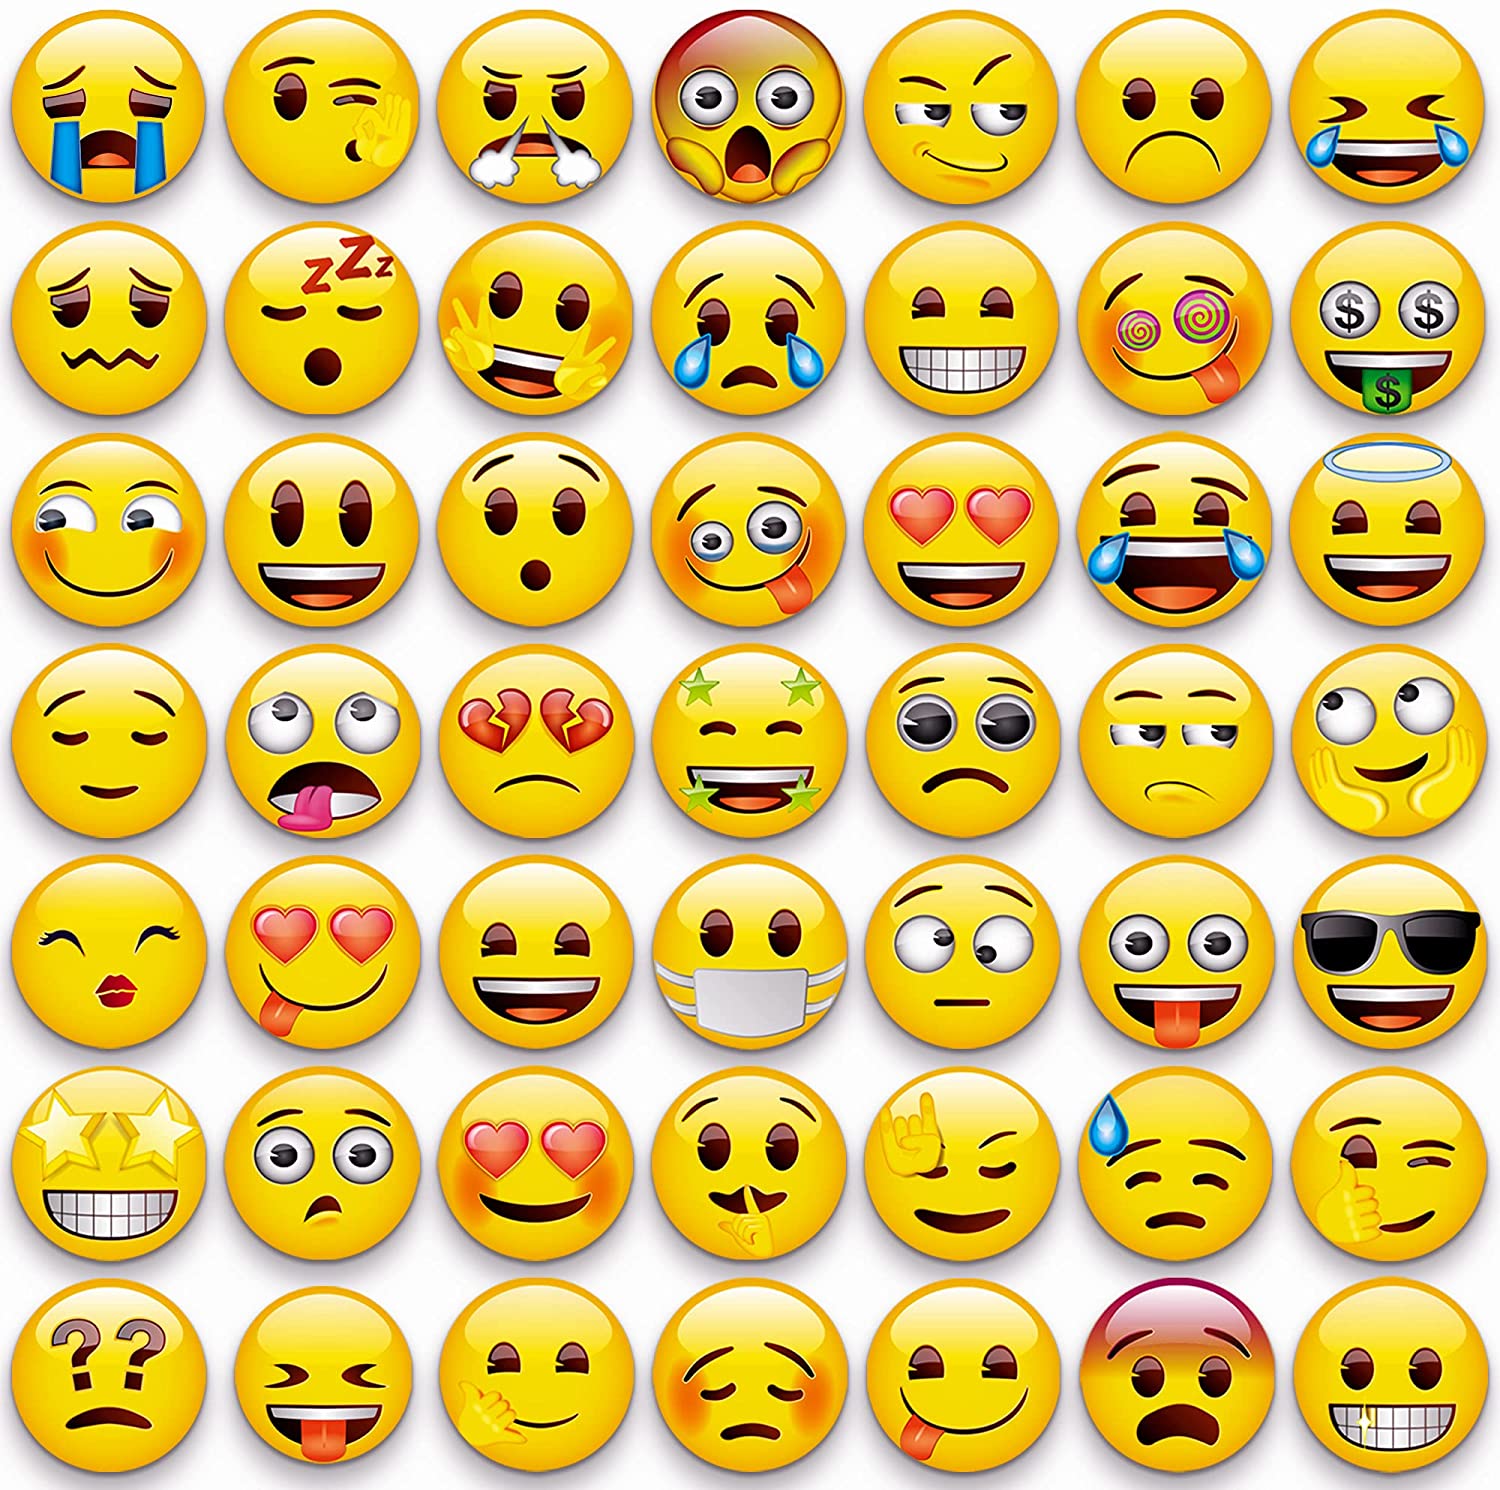 M MORCART Assorted Emoji Faces Refrigerator Magnets, 54-Count